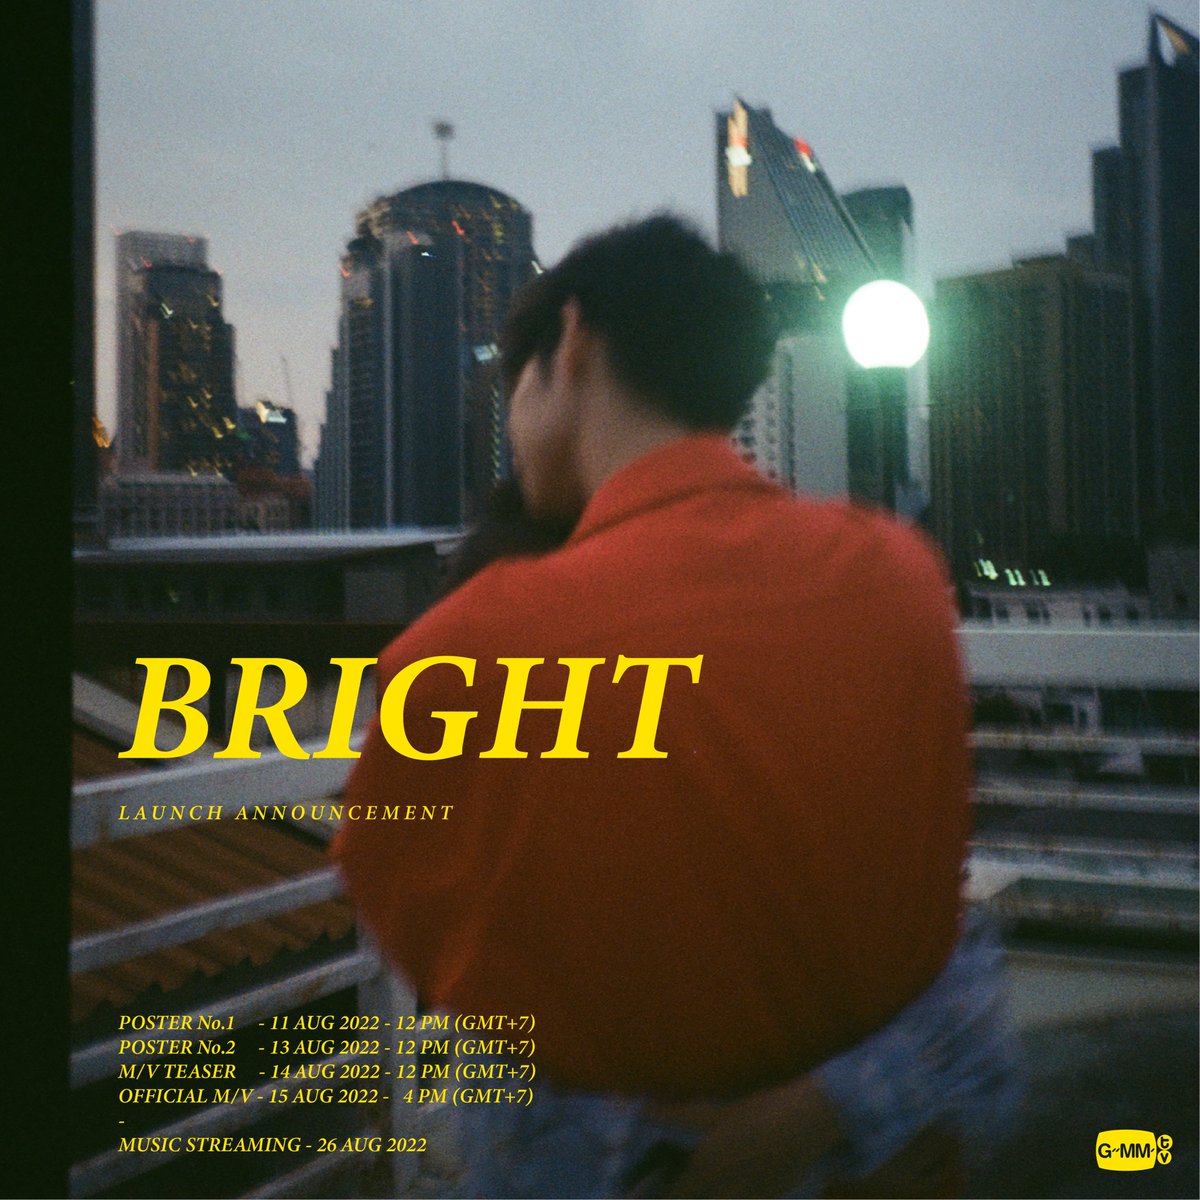 BRIGHT
#Bright_LostandFound 
@bbrightvc